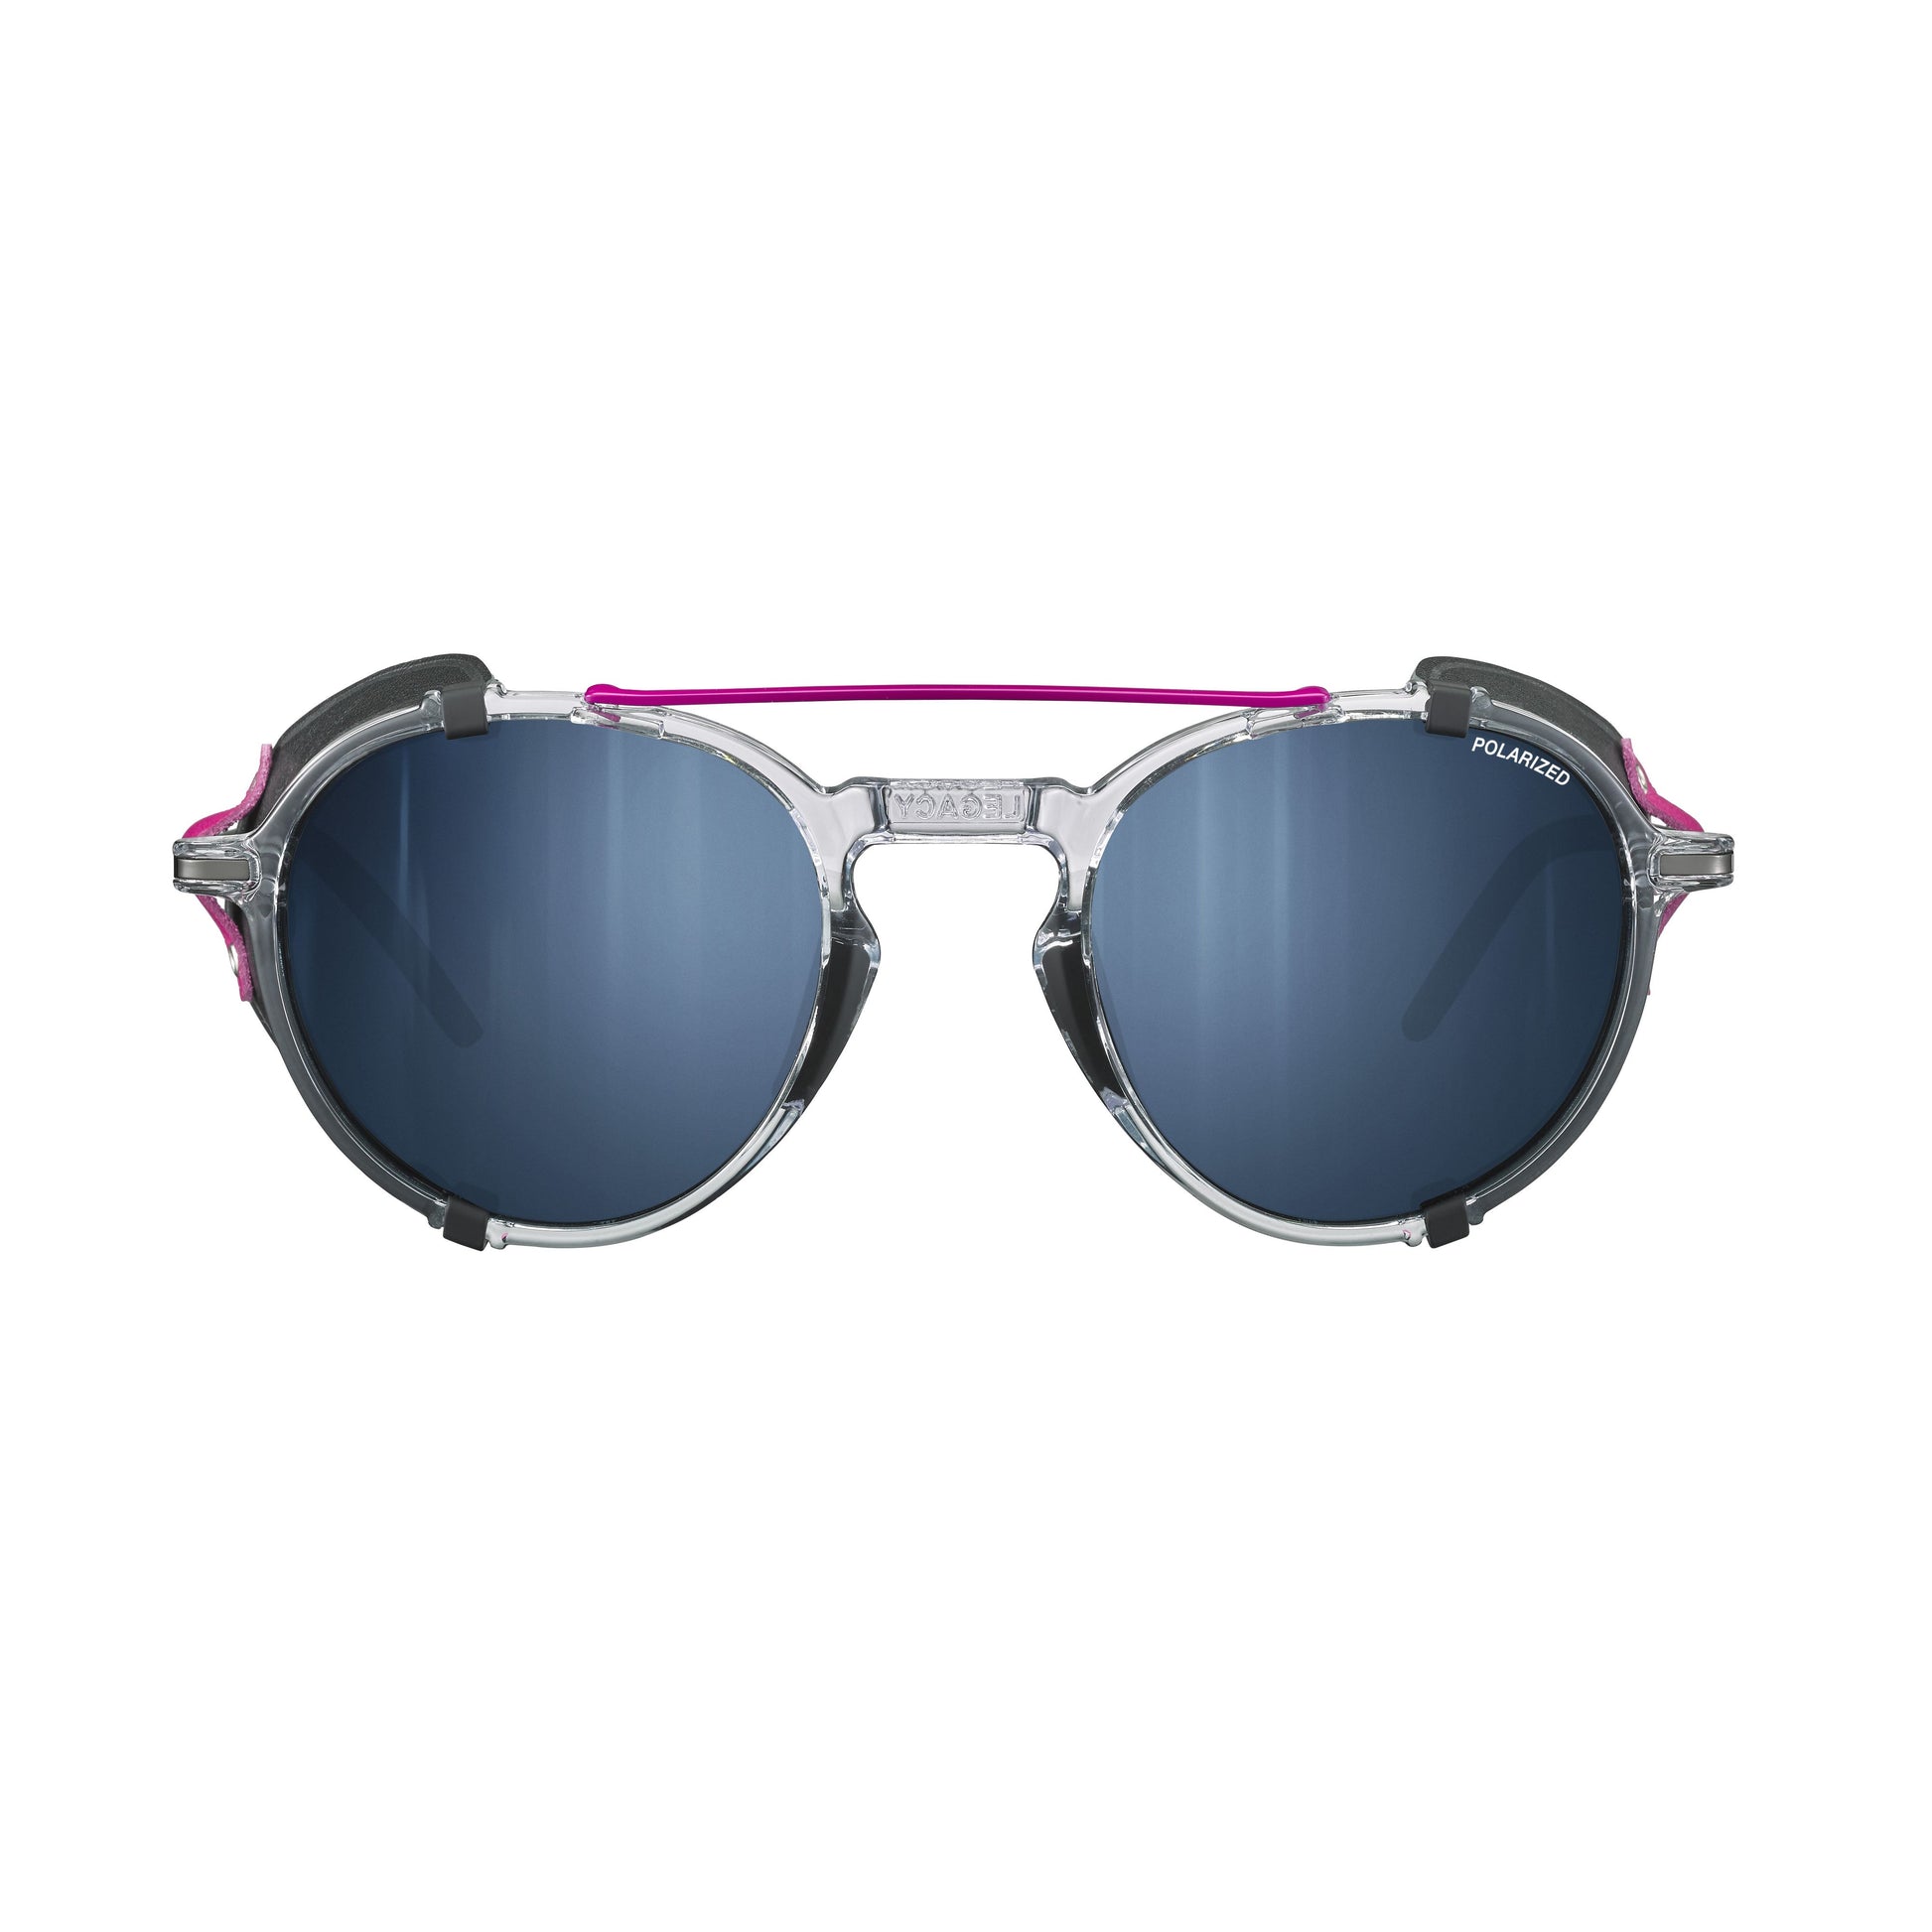 Girls Polarized Fishing Glasses - Pink Camo